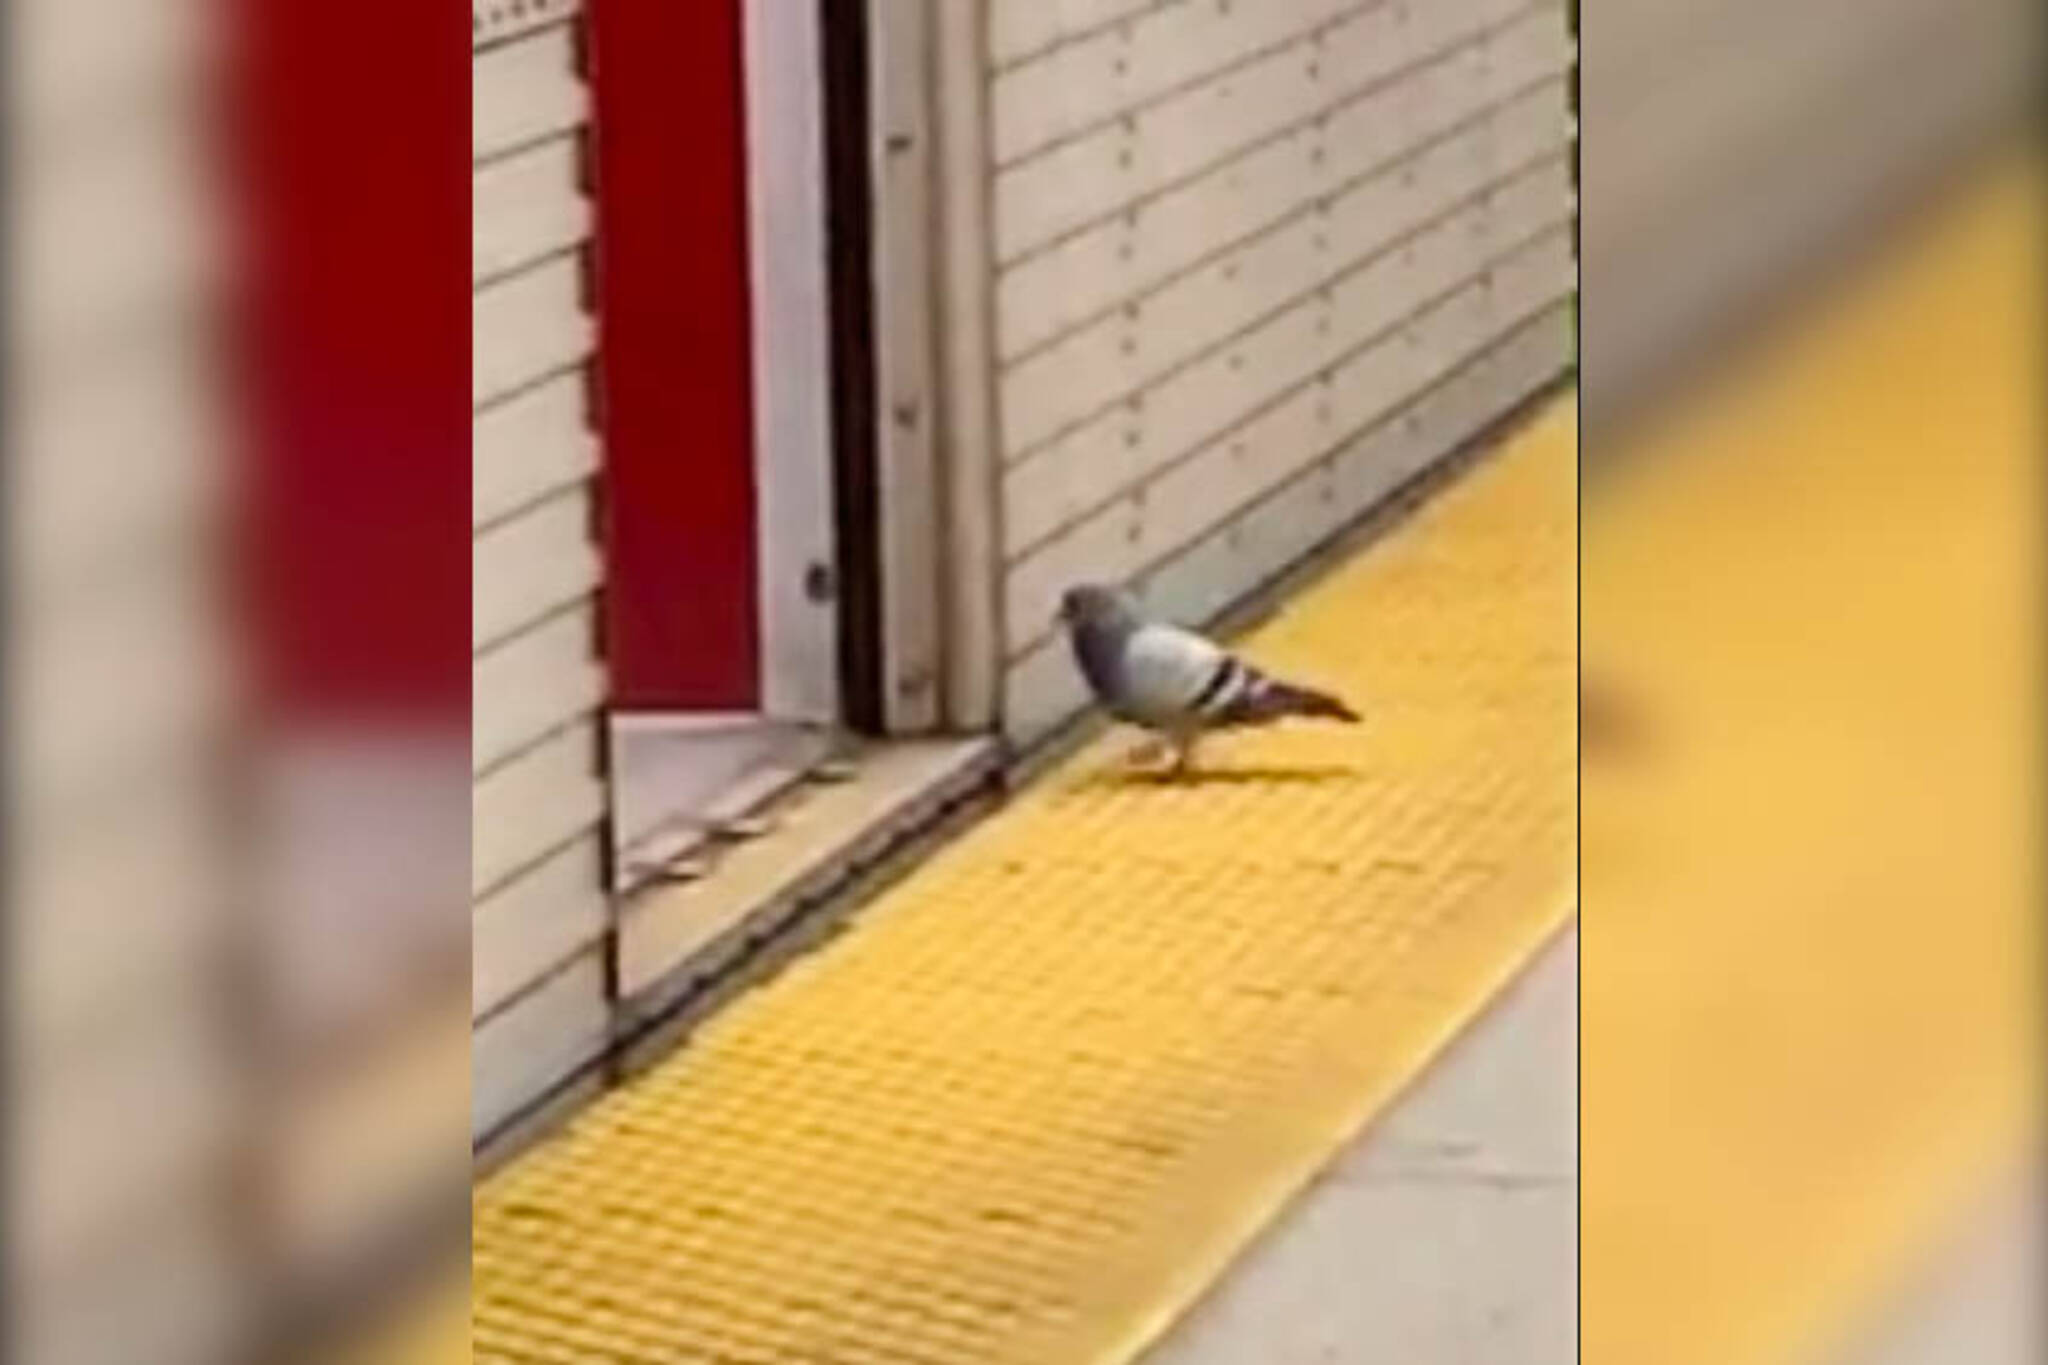 Toronto pigeon subway